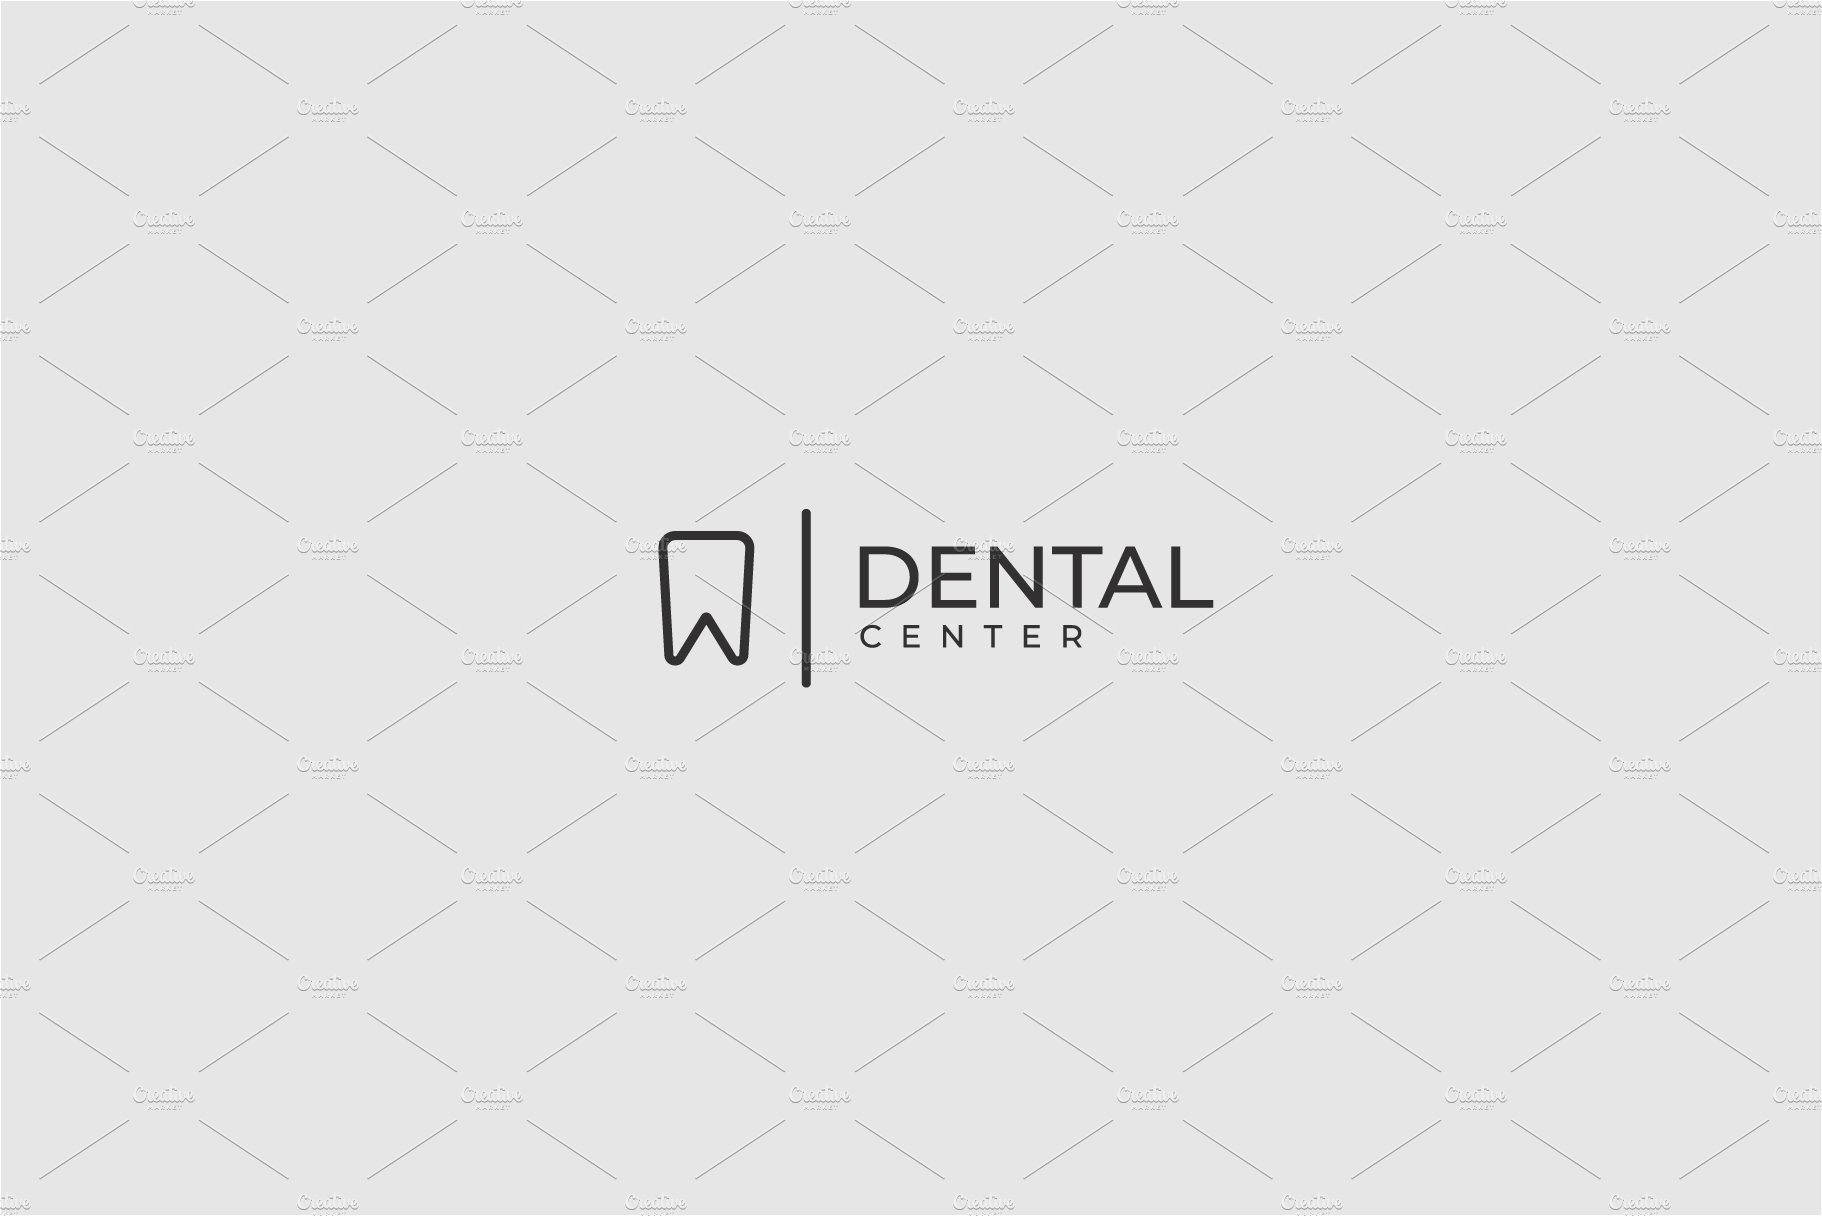 Modern minimalistic dentist logo des cover image.